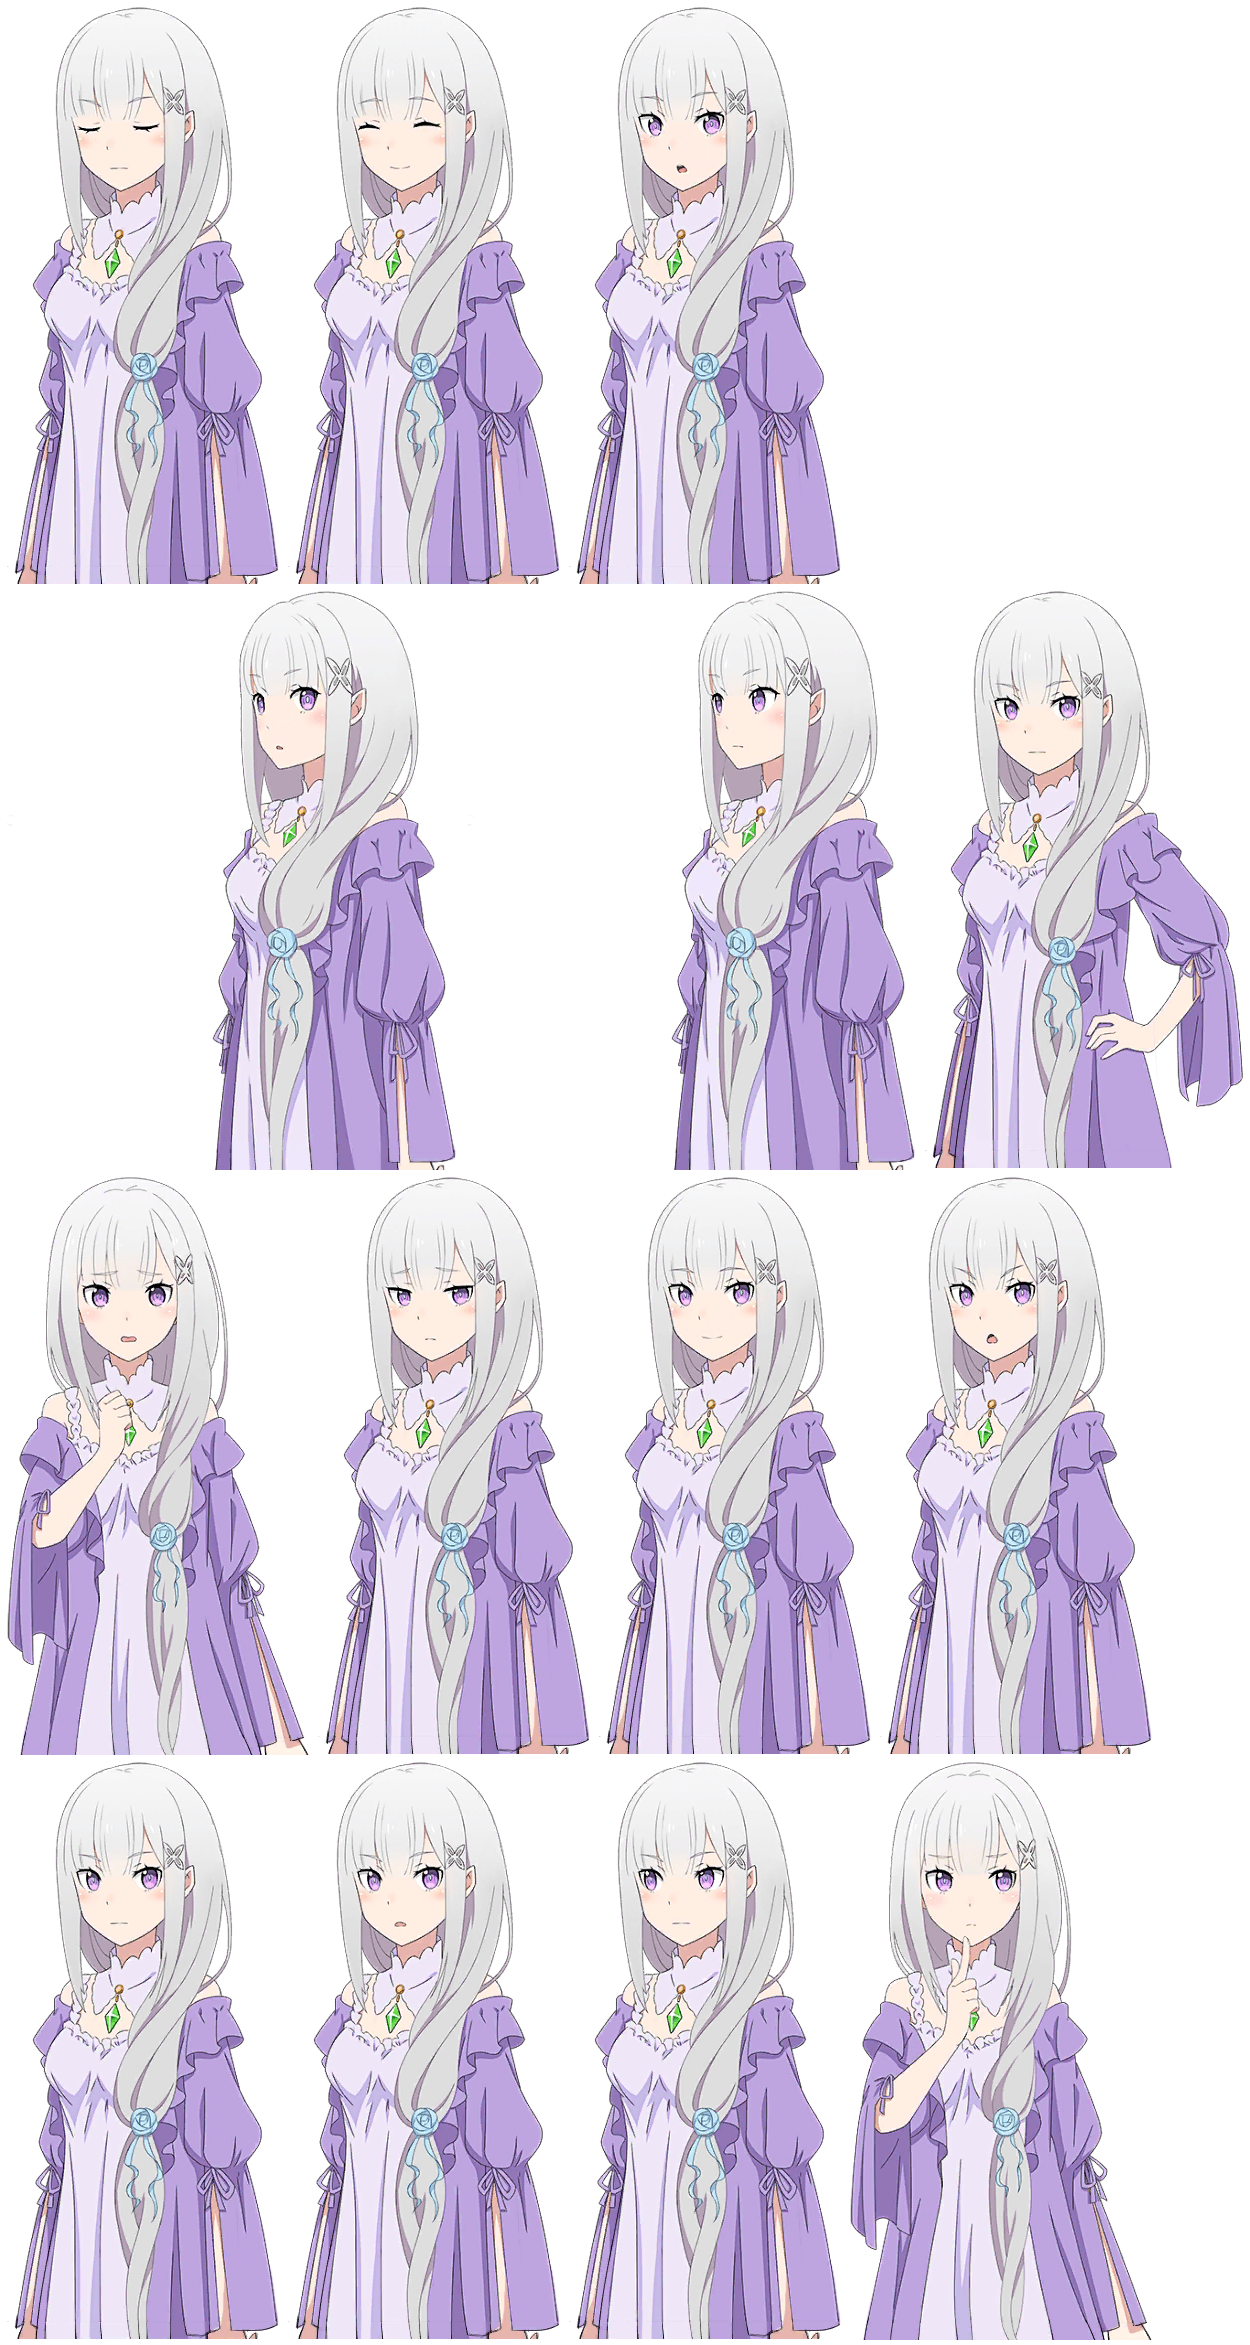 Emilia (Alternate Outfit 2)